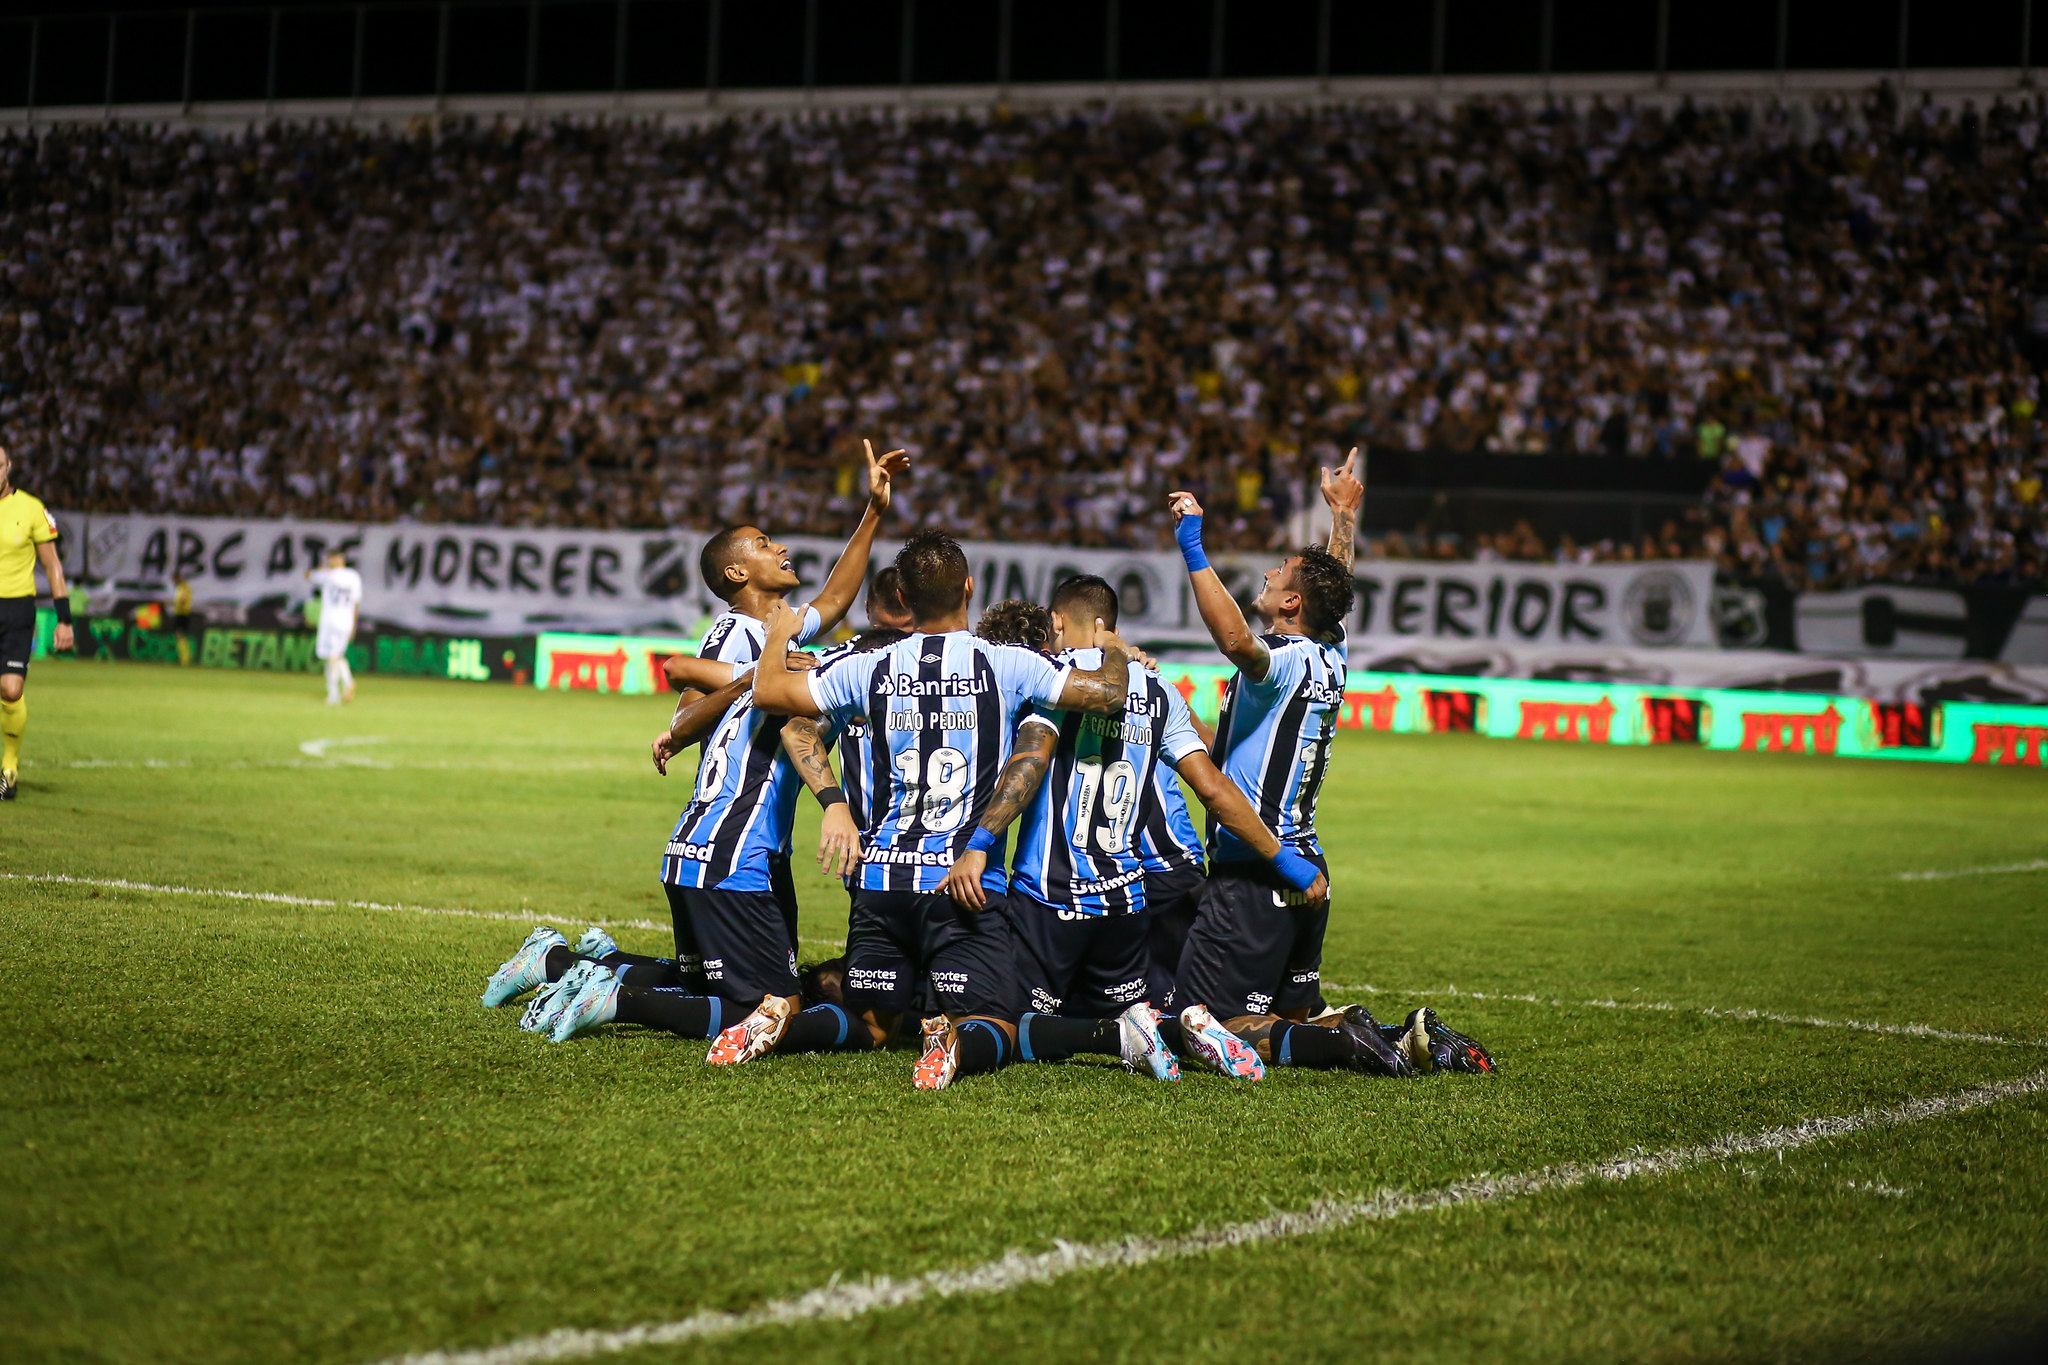 Grêmio vs. [Opponent]: A Clash of Titans on the Football Field